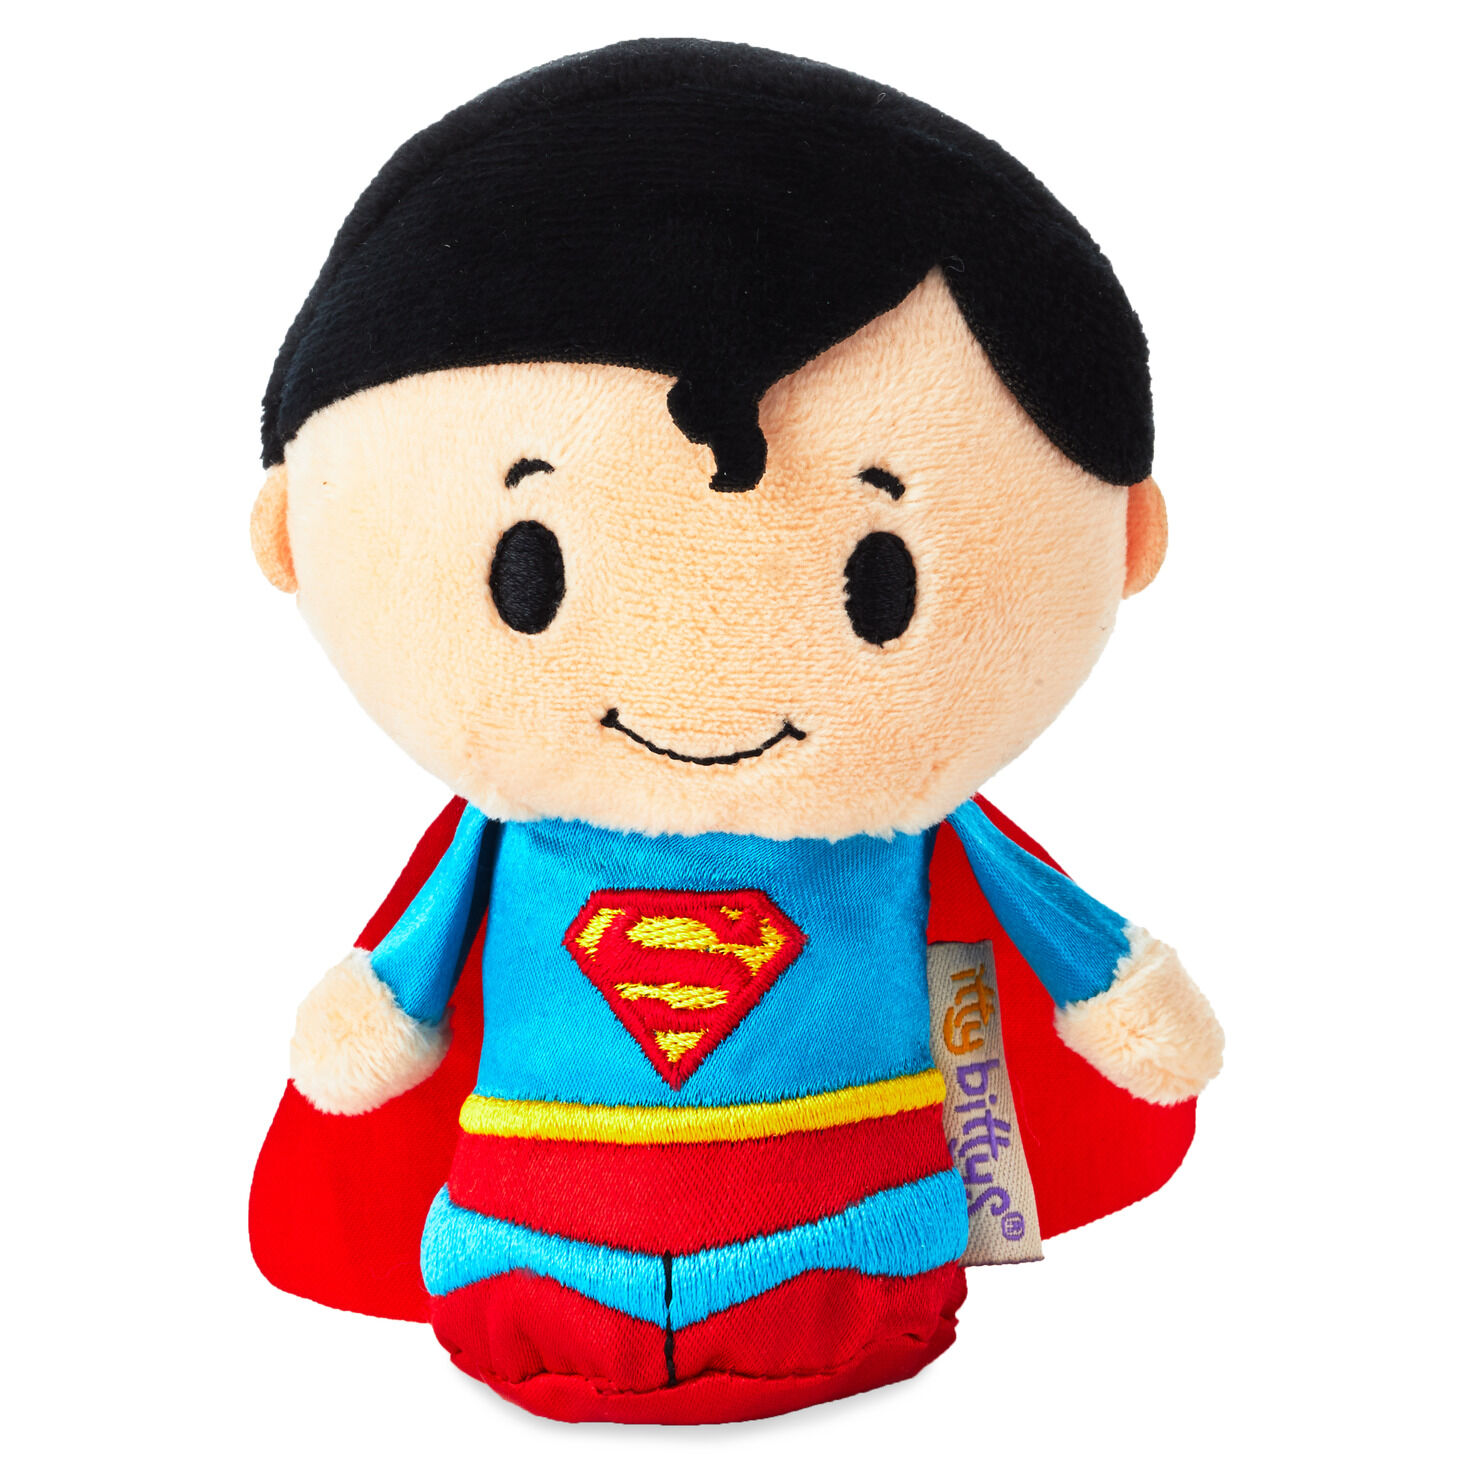 Superman Batman Soft Plush Stuffed Doll Christmas Toy Kids Free Shipping 